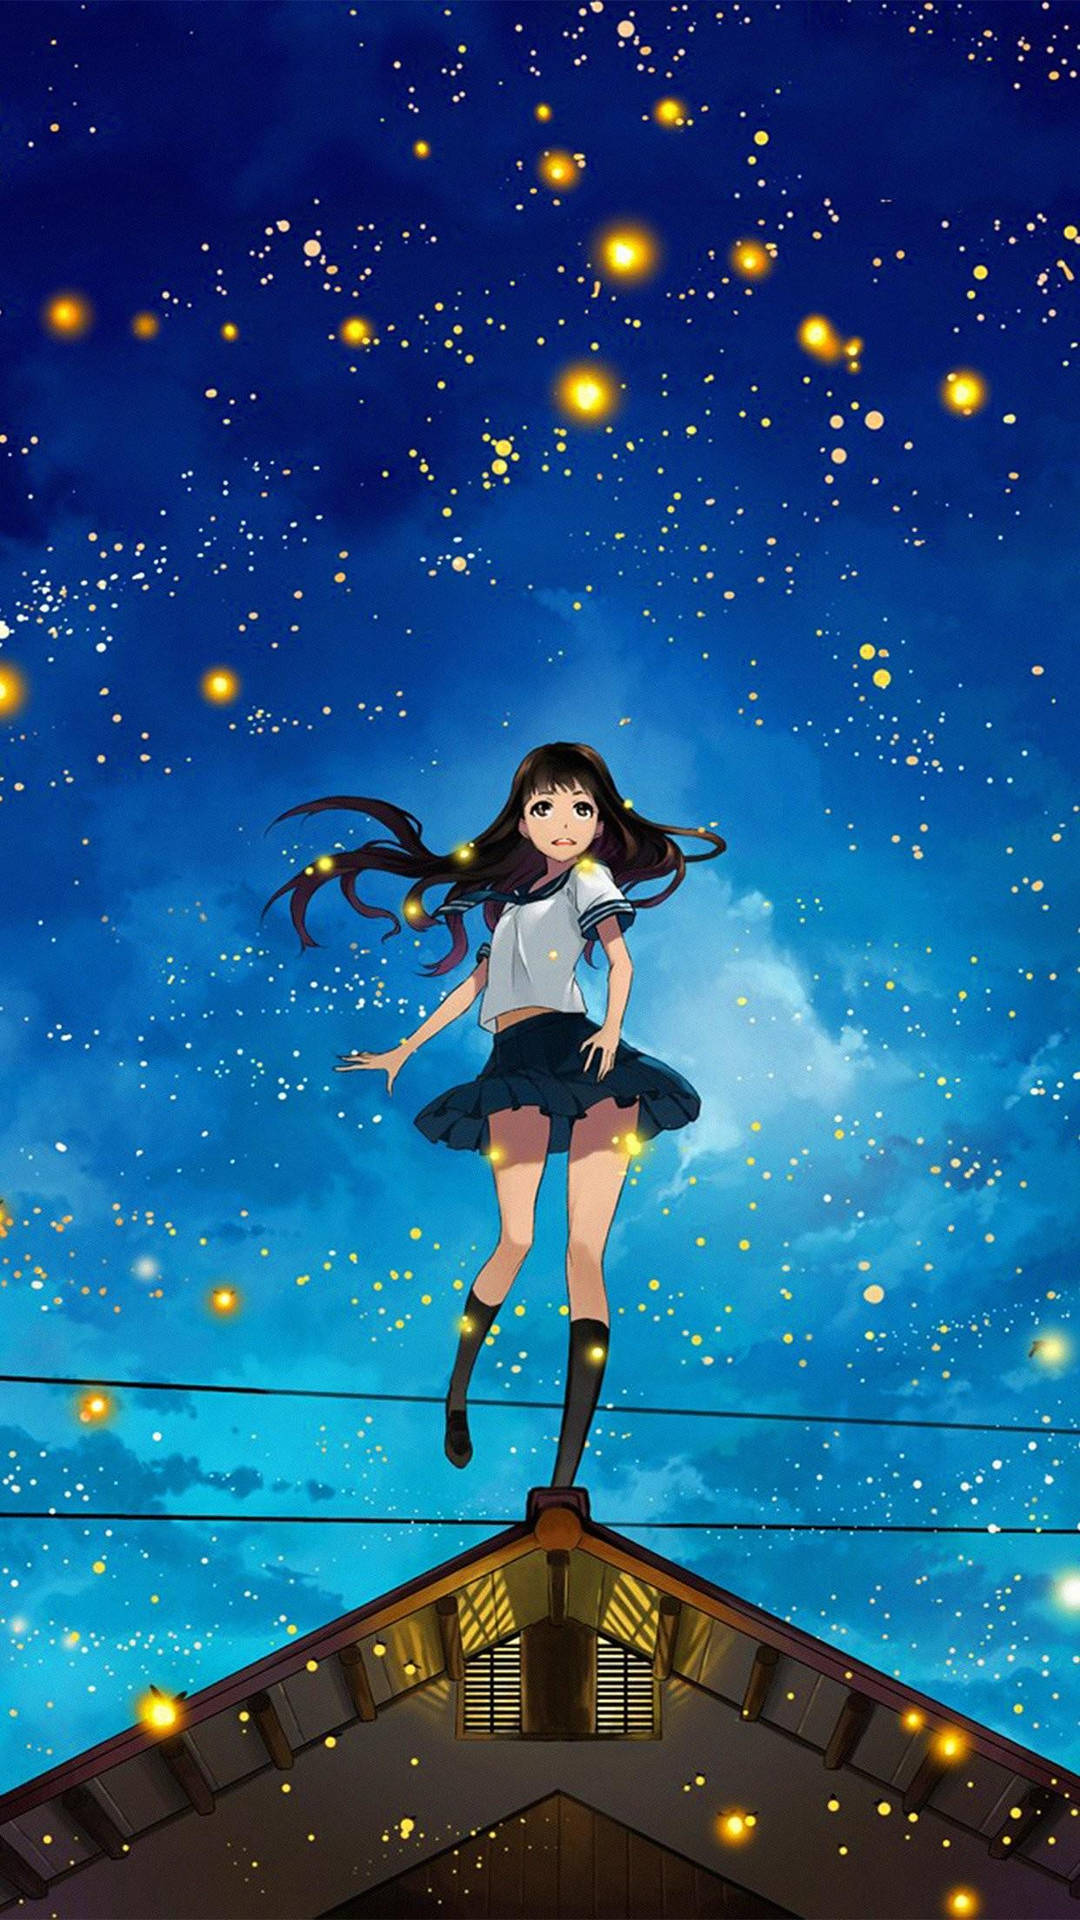 Aesthetic Anime Girl On Roof With Fireflies Phone